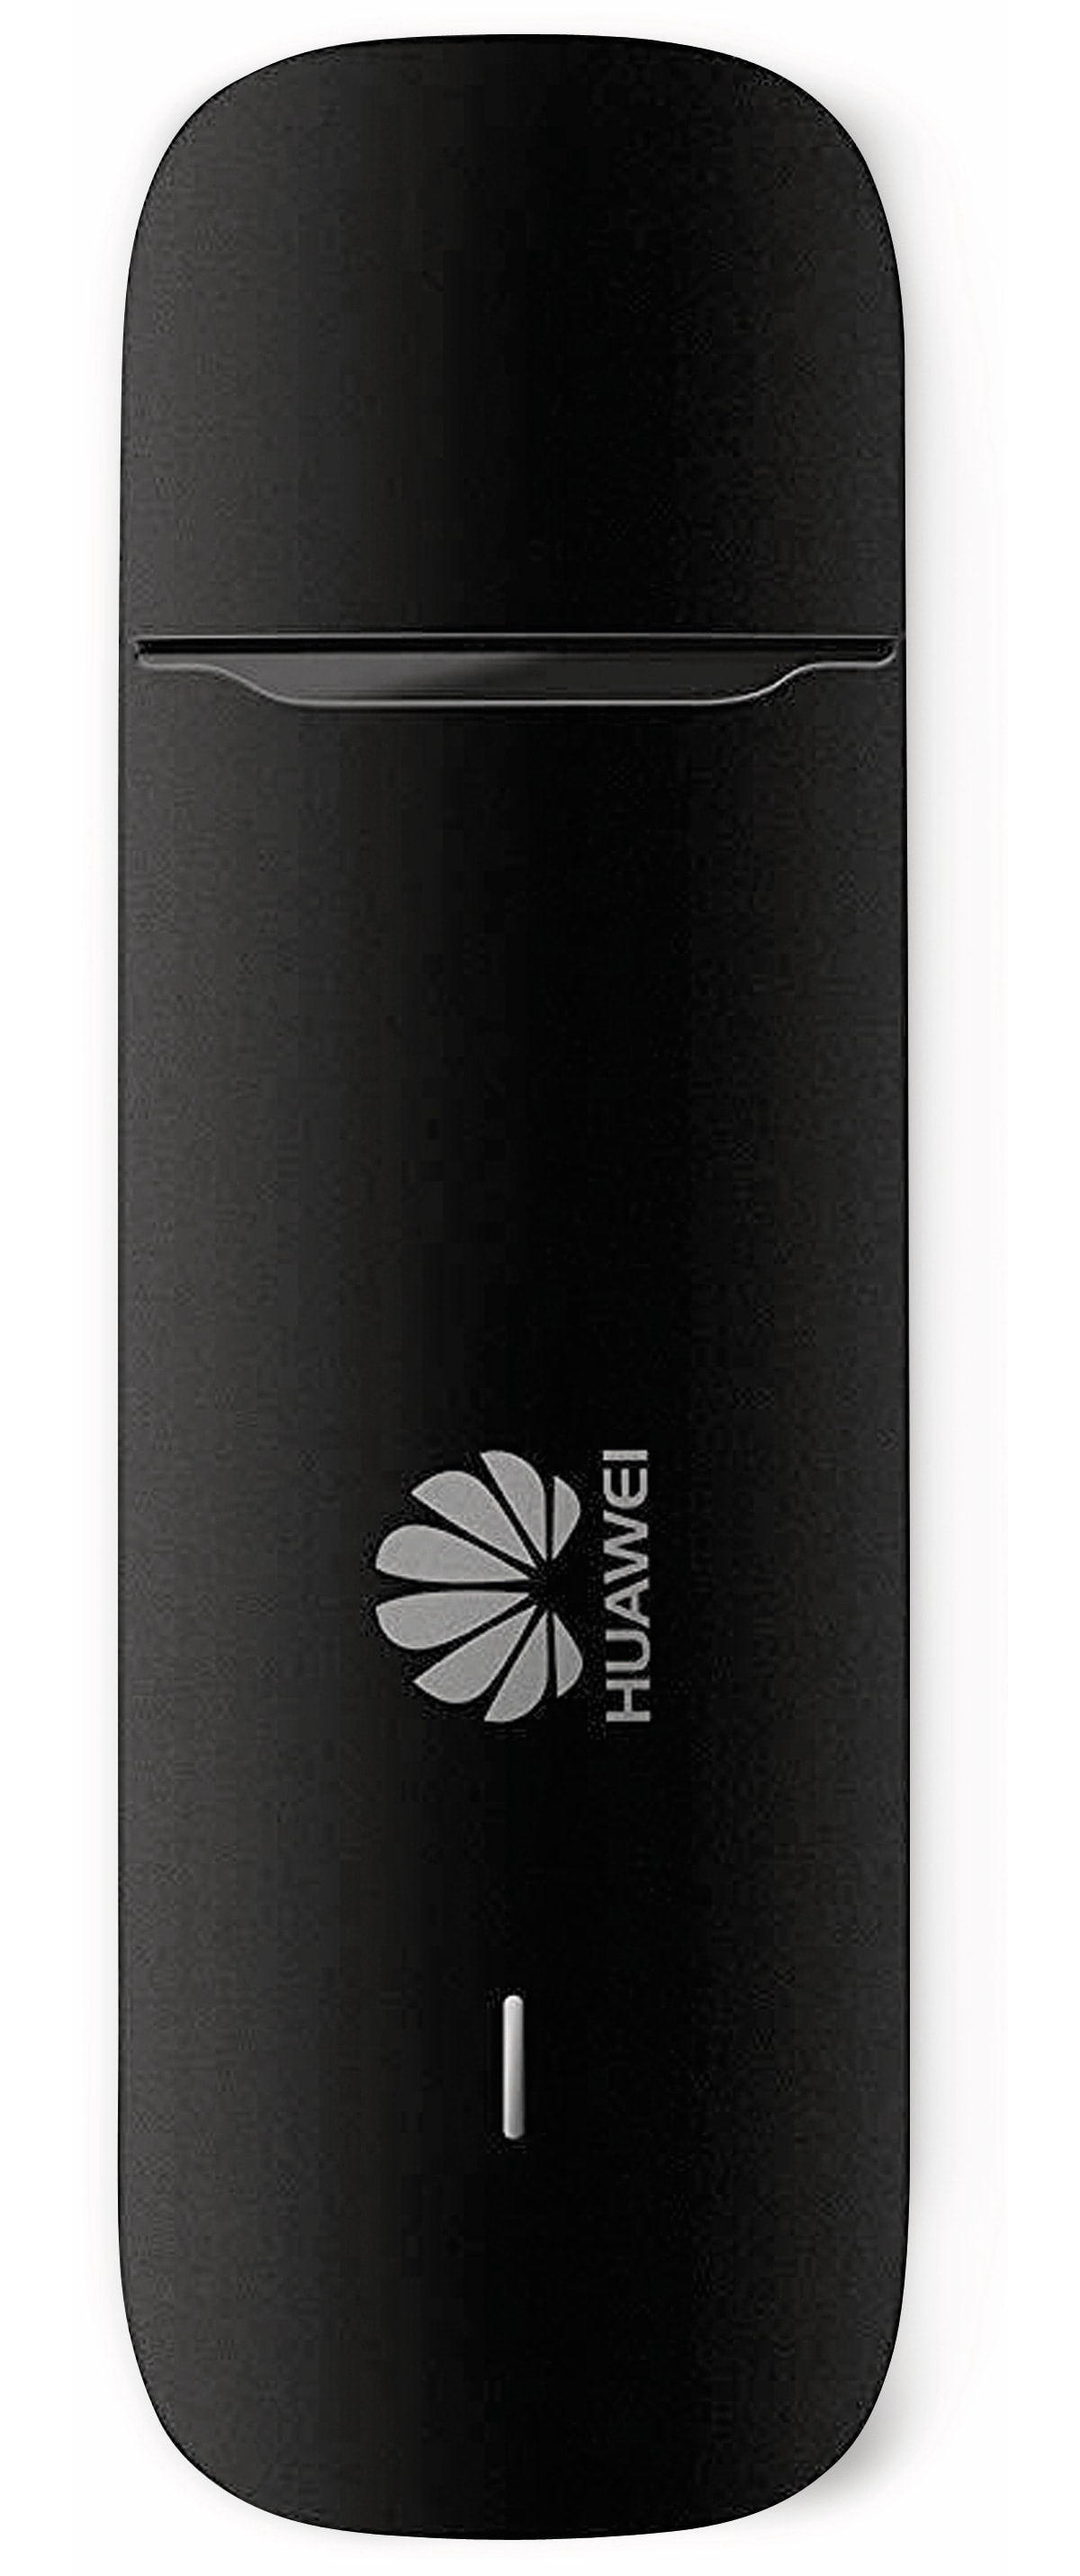 Huawei UMTS-Stick E3531, schwarz